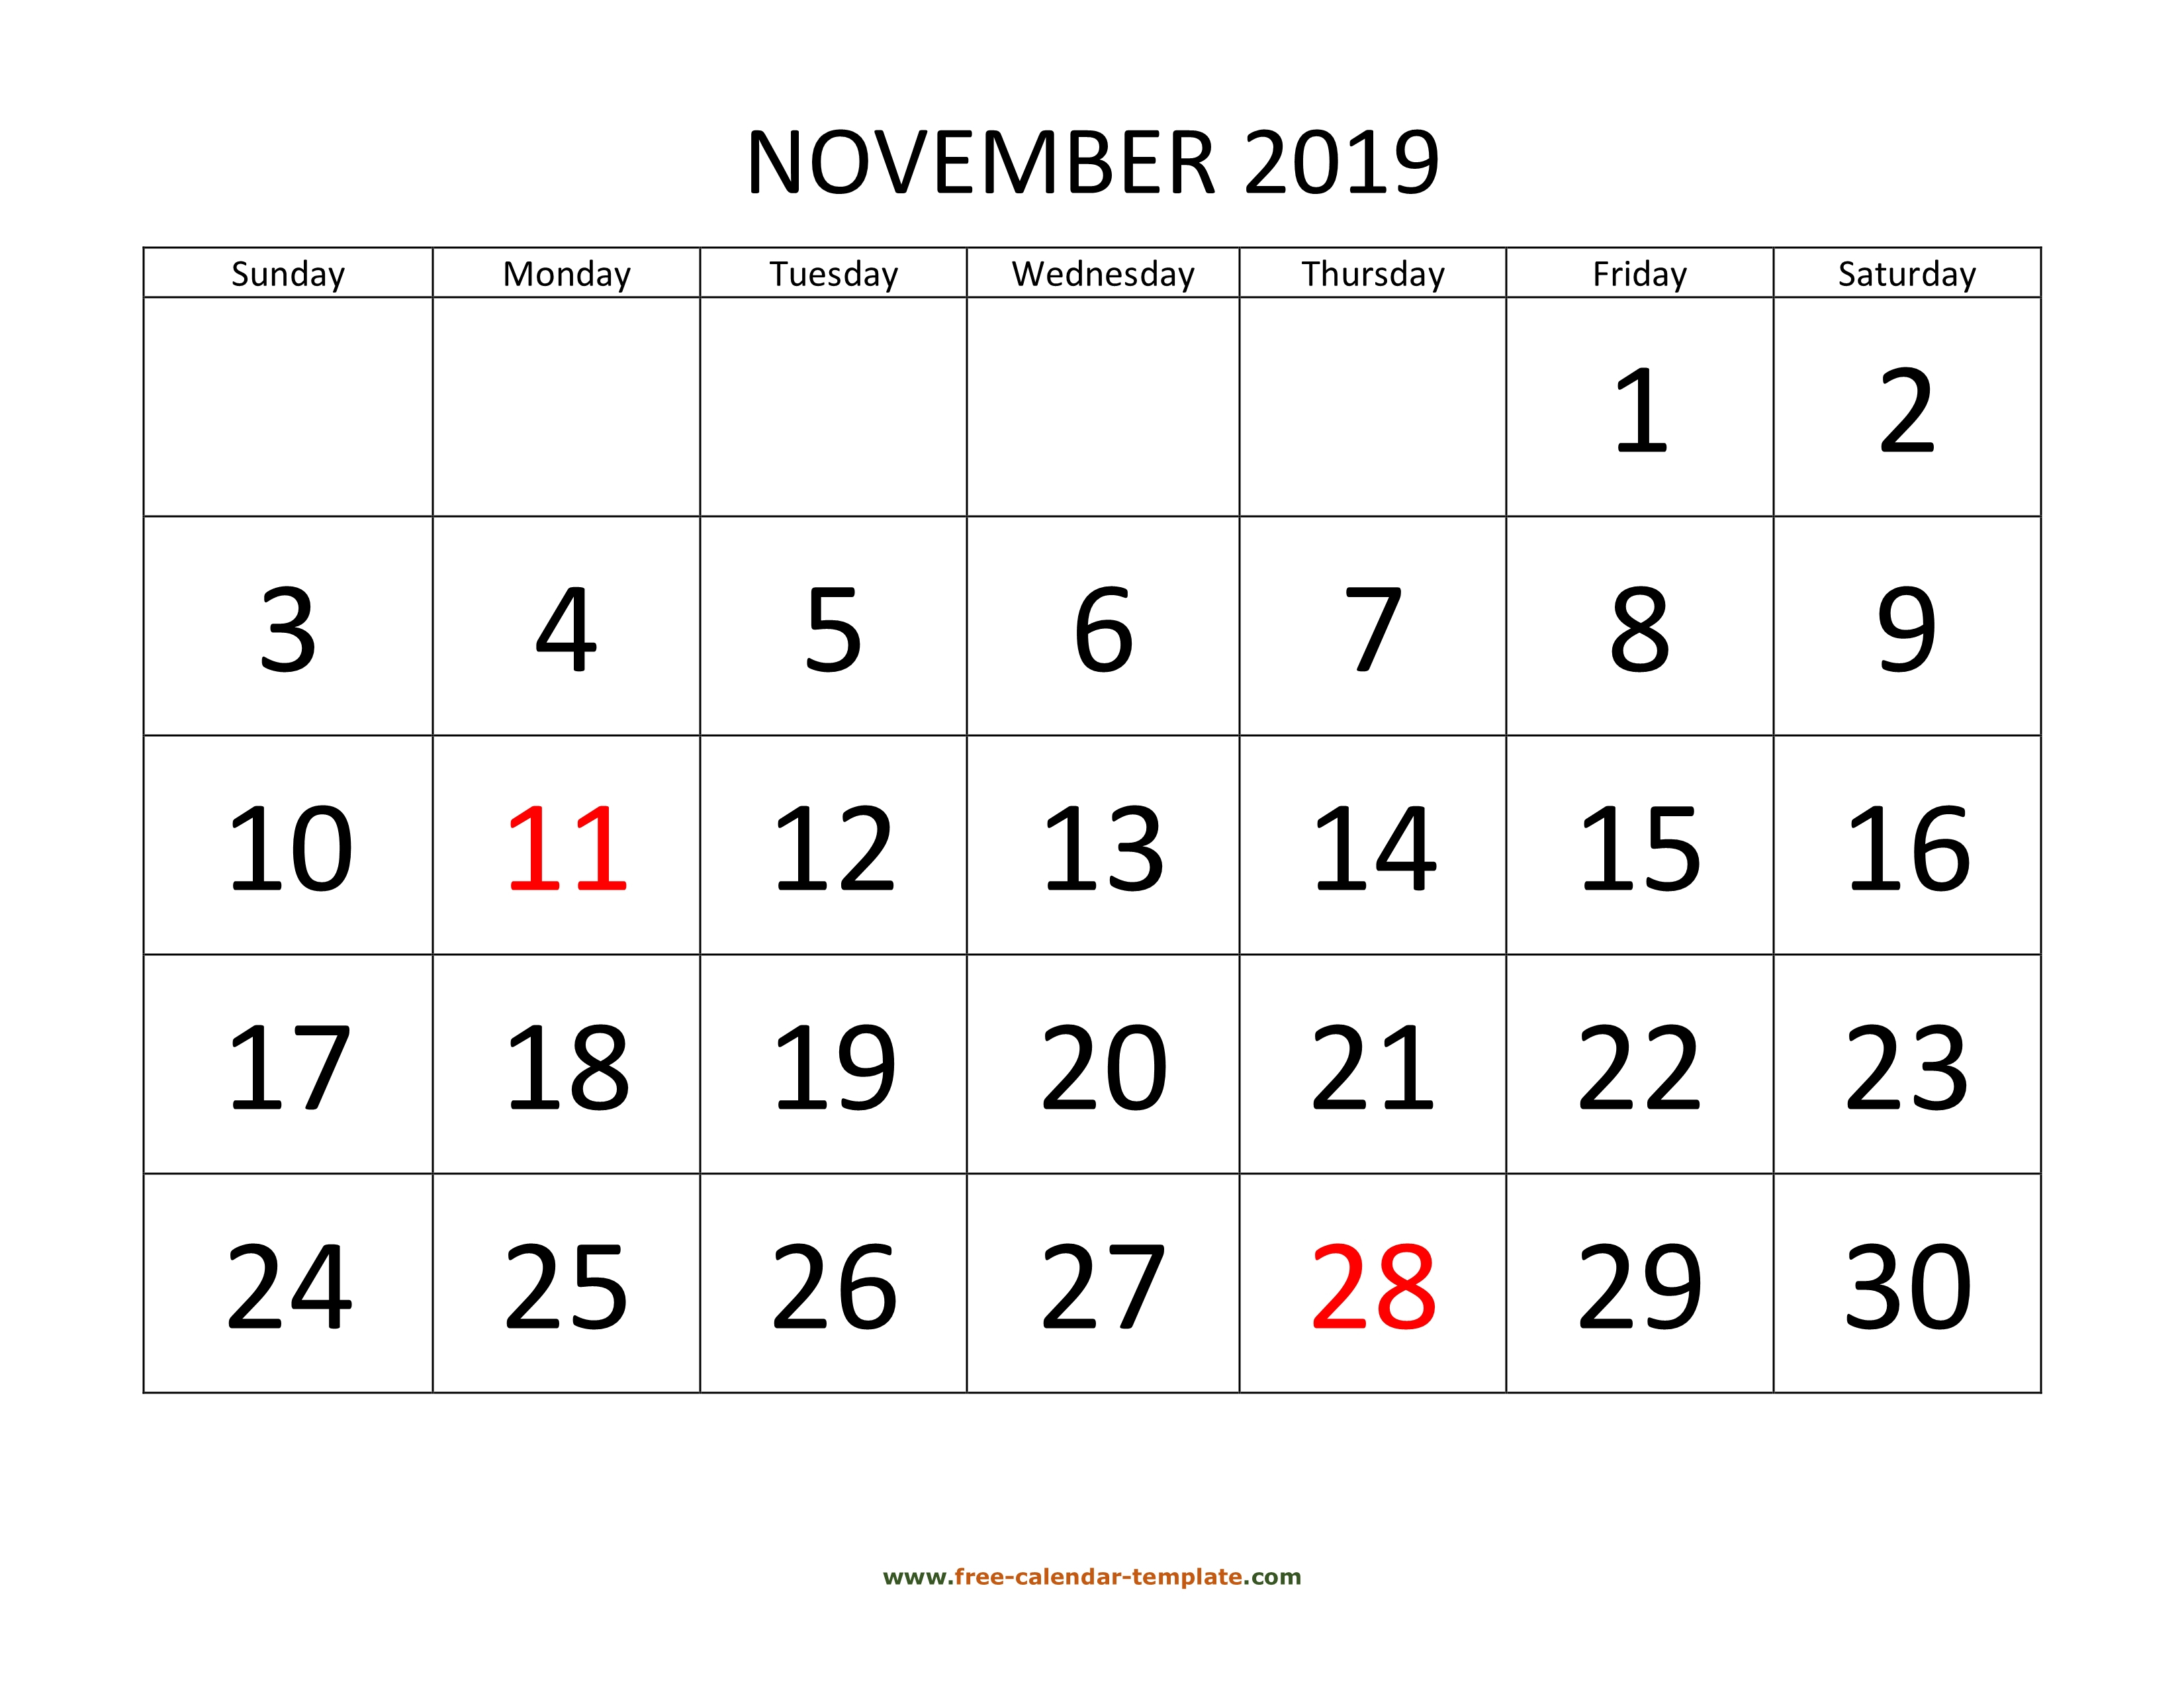 November 2019 Free Calendar Tempplate | Freecalendar with regard to Preschool Monthly Calendar Template